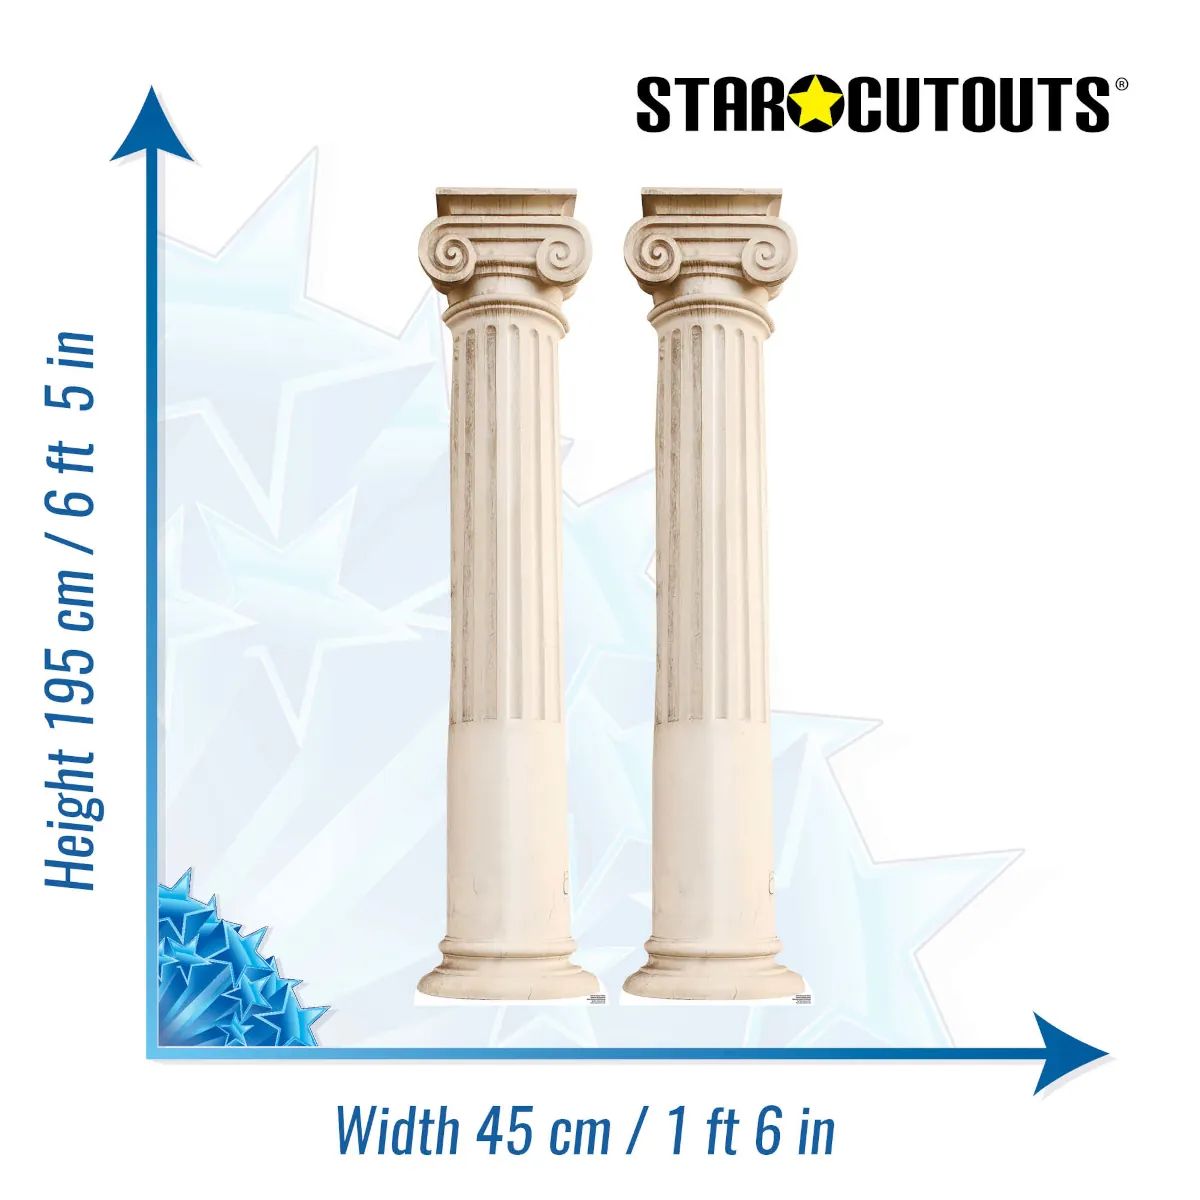 SC4150 Two Roman Pillars Large Cardboard Cutout Standee Size